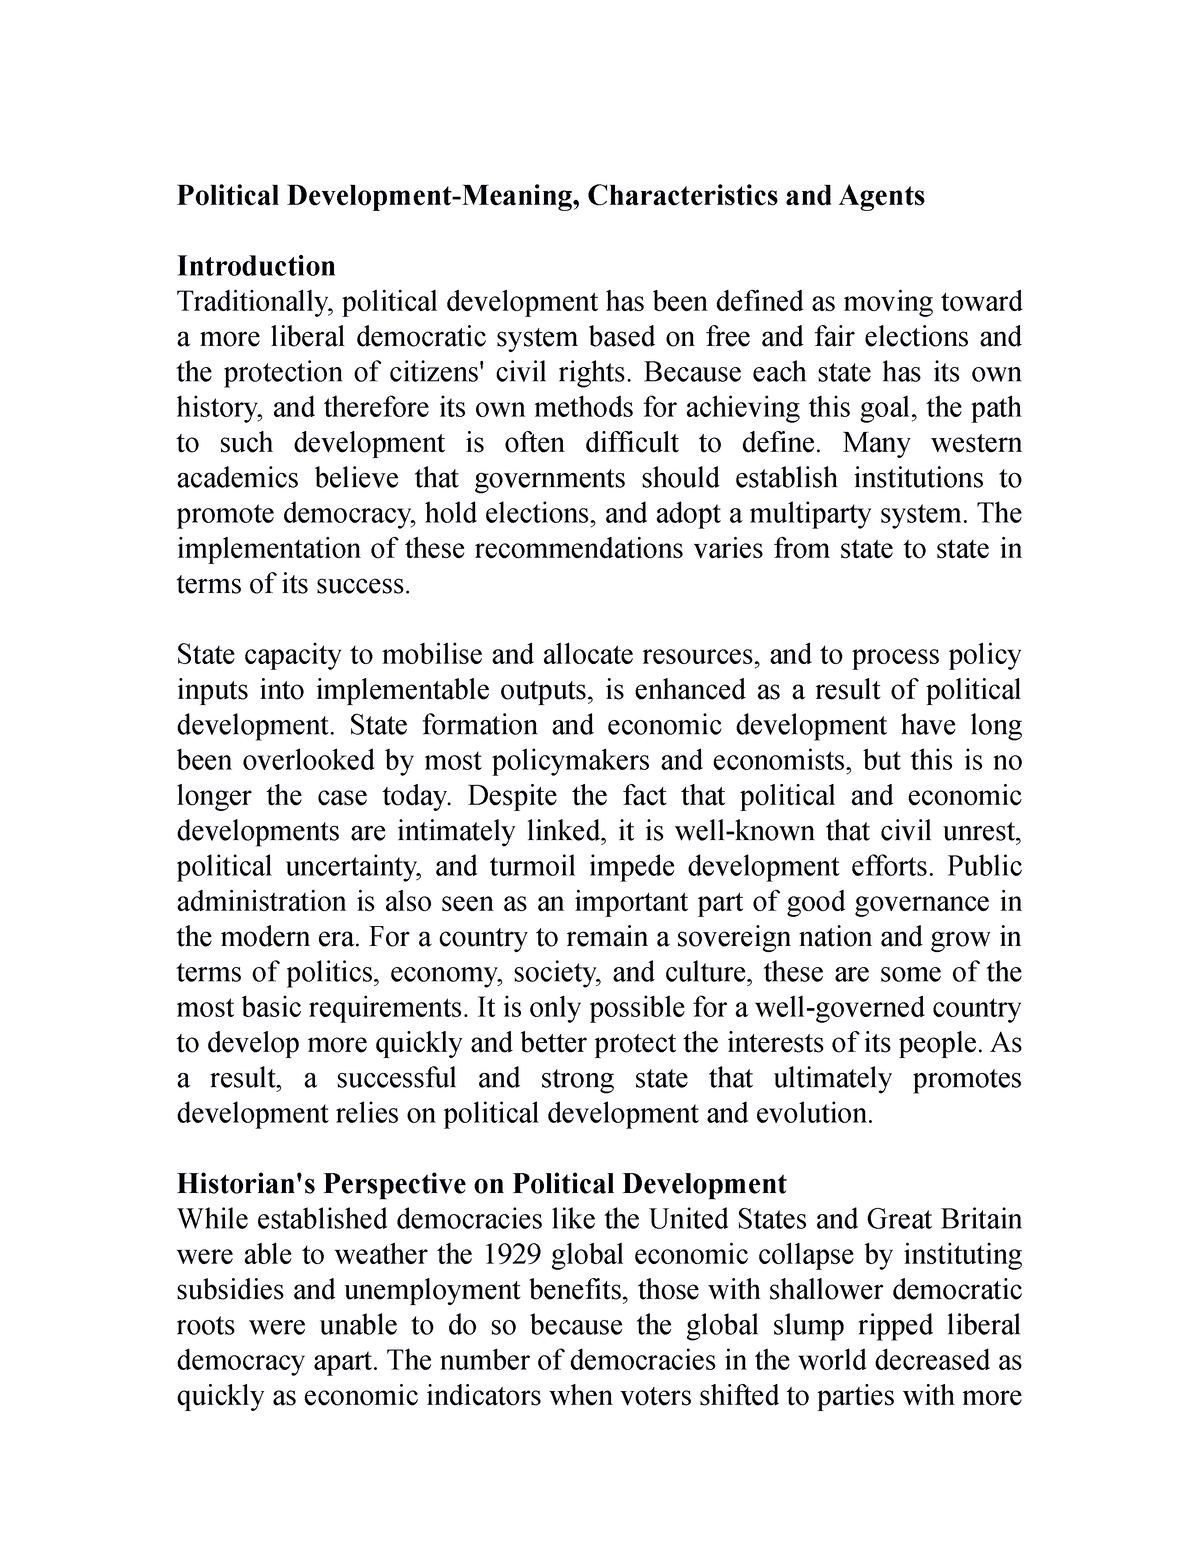 essay on political development